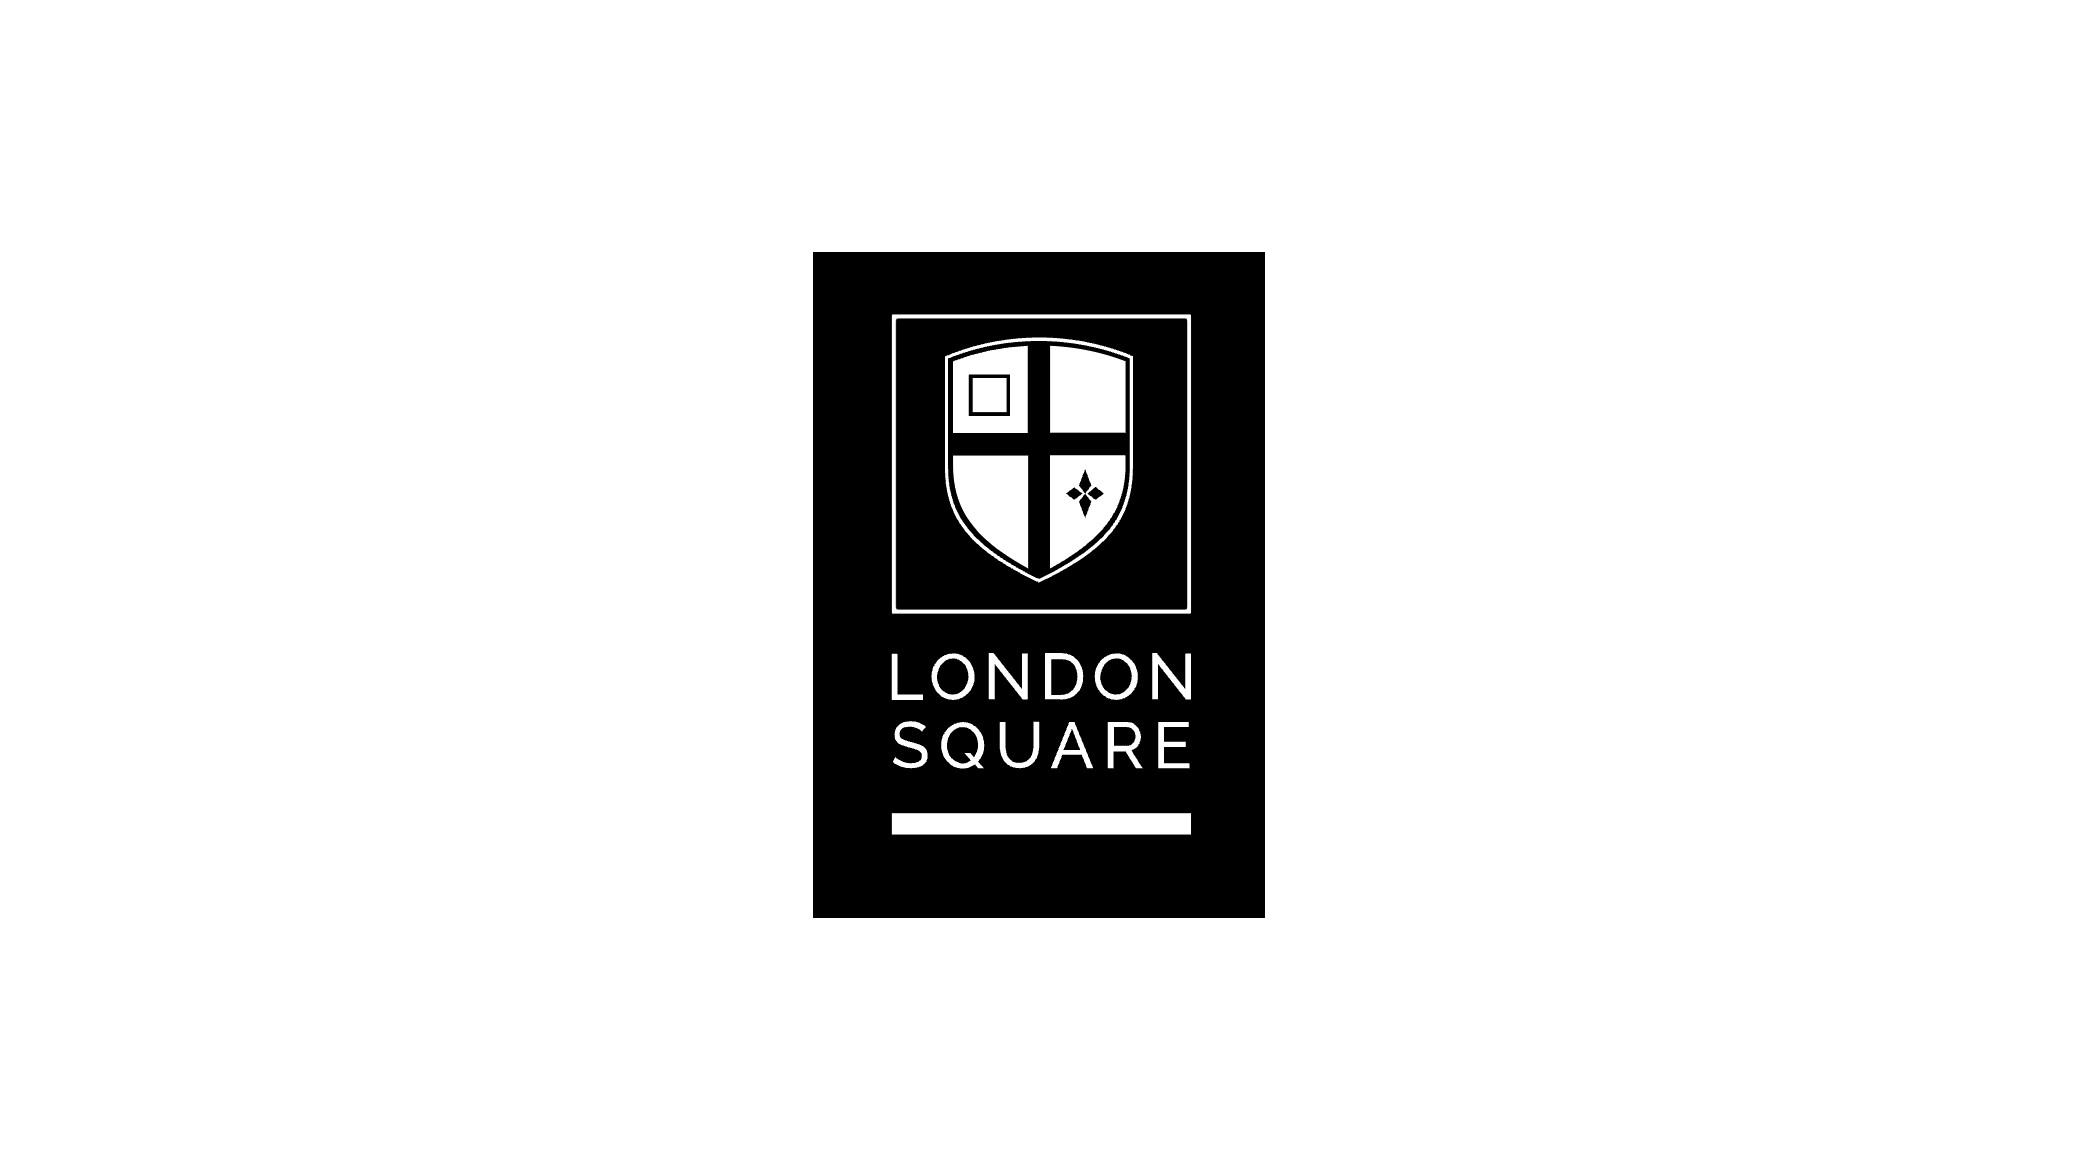 London Square Earlsfield - London Square logo as development cover